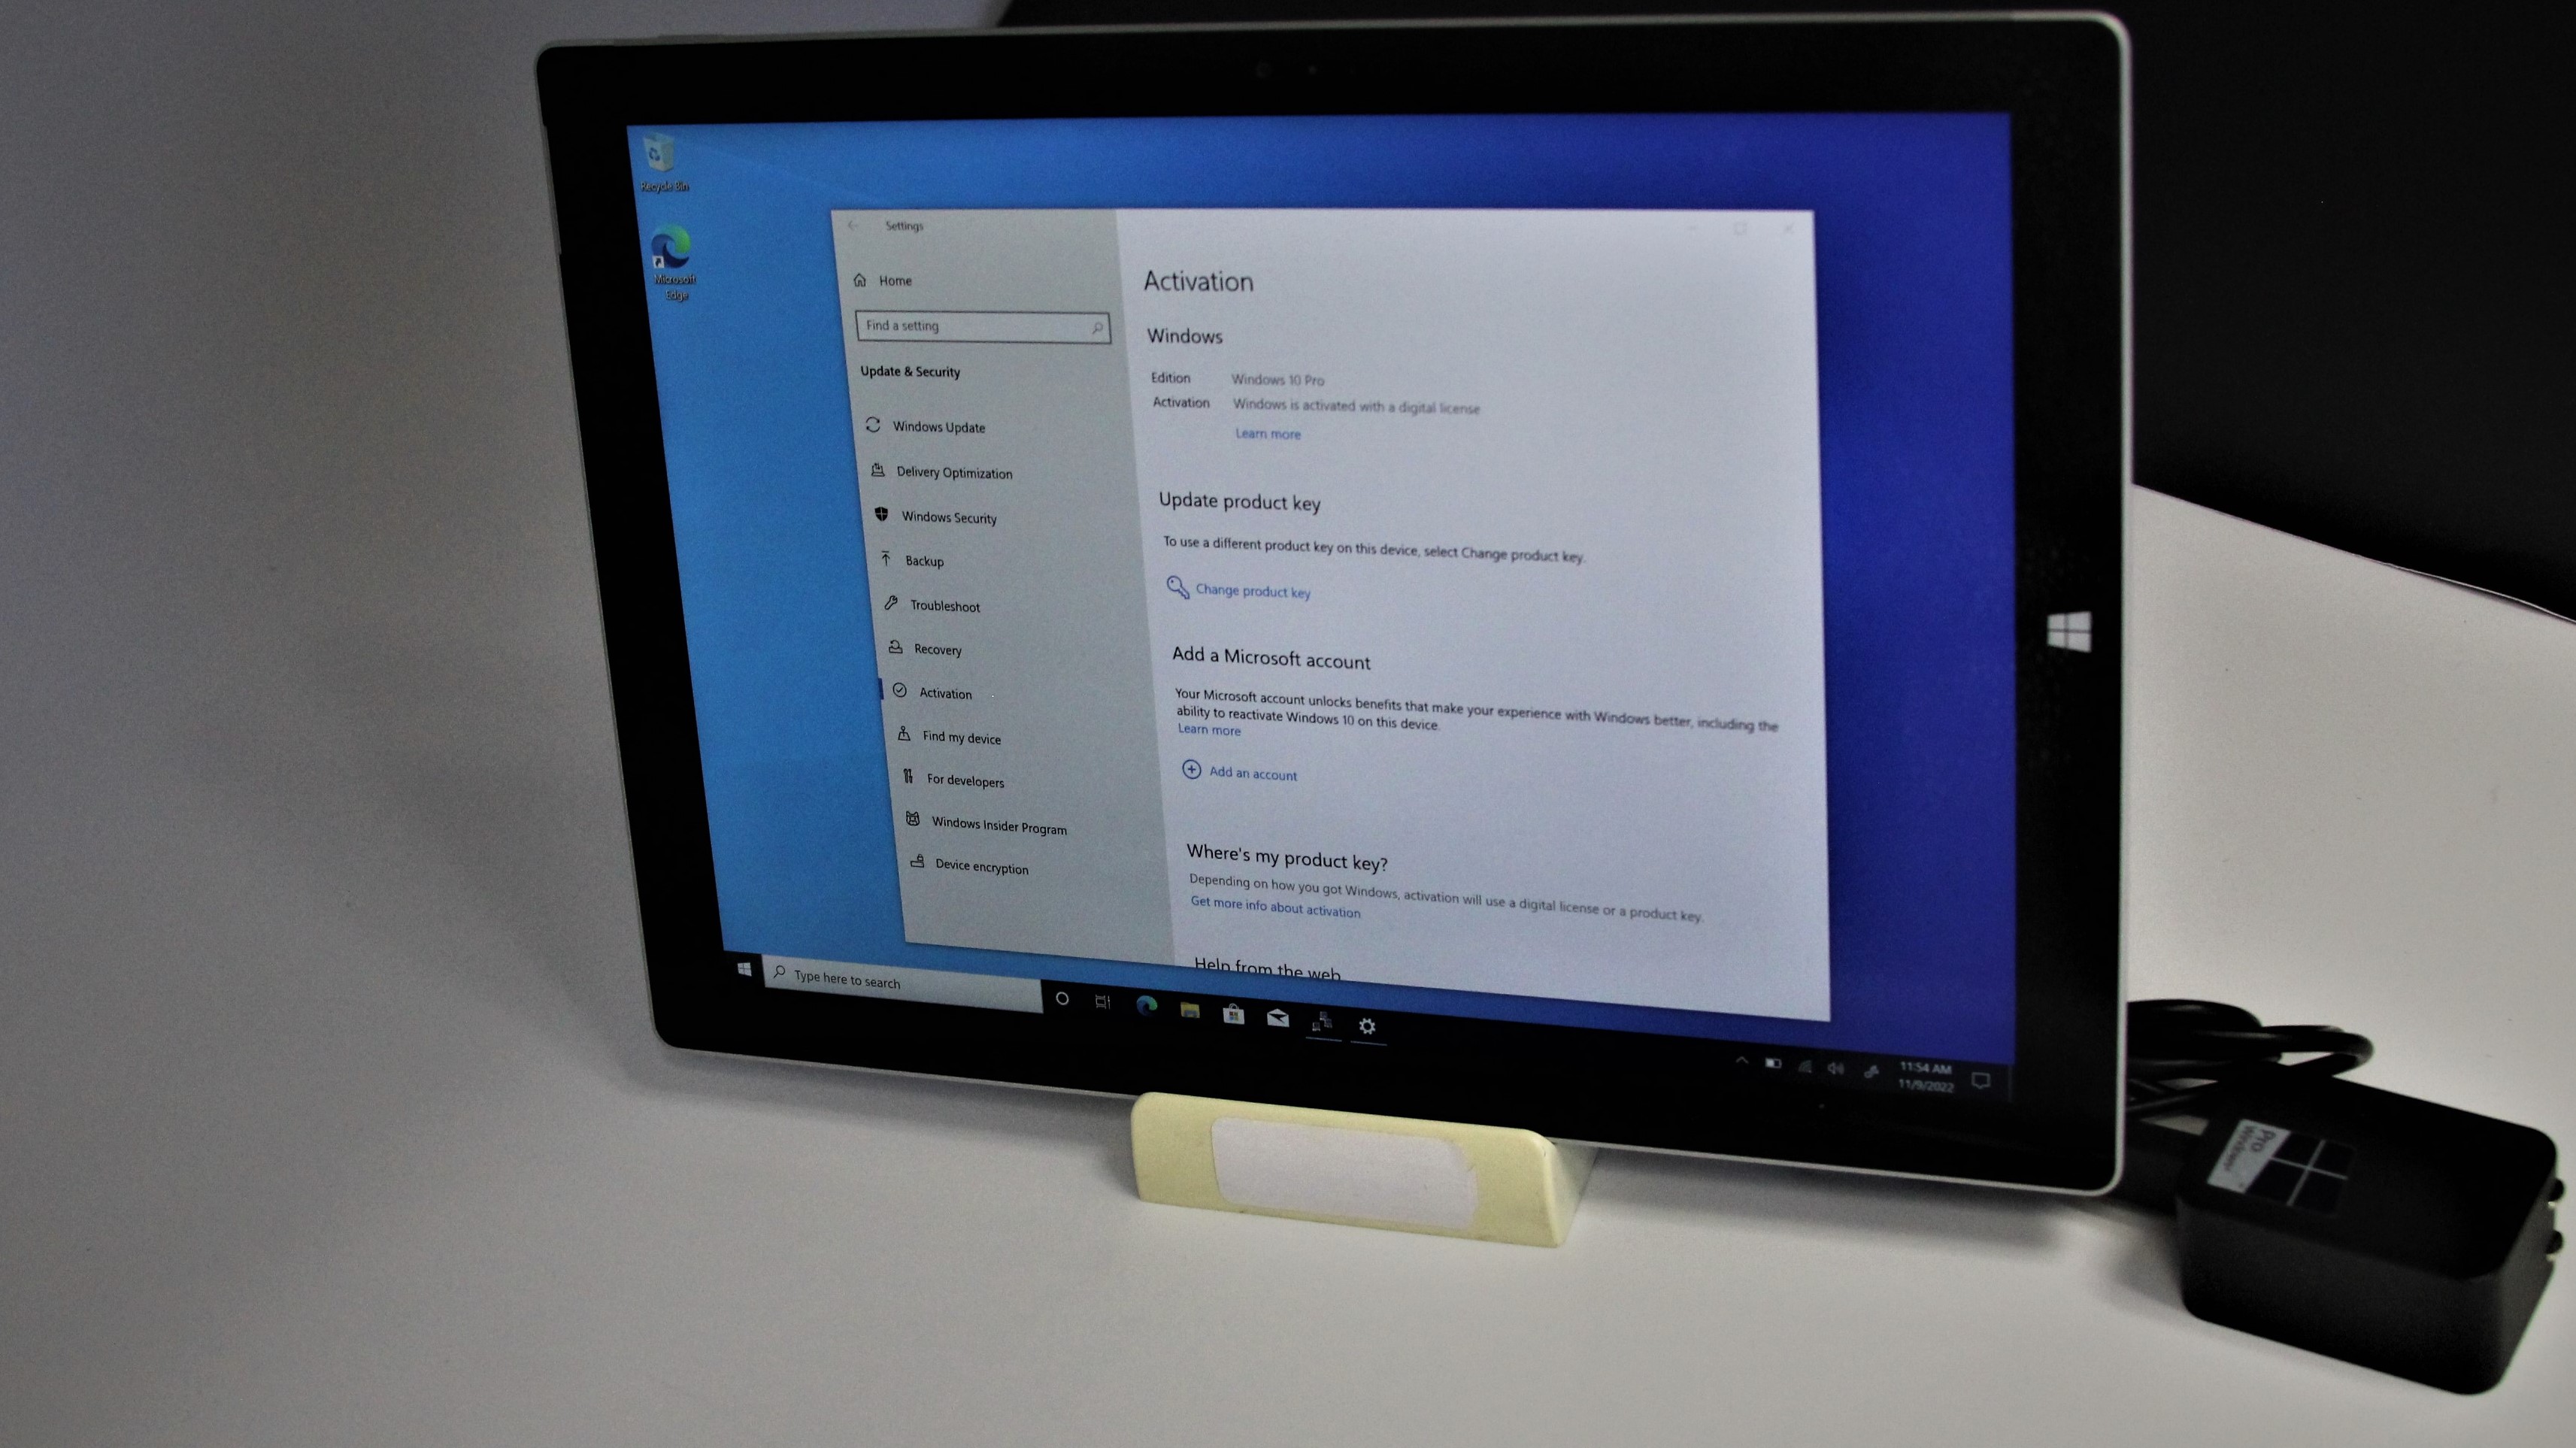 Microsoft Surface Pro 3 I3-4020Y 1.50GHz 4GB RAM 64GB HDD Win 10 Pro